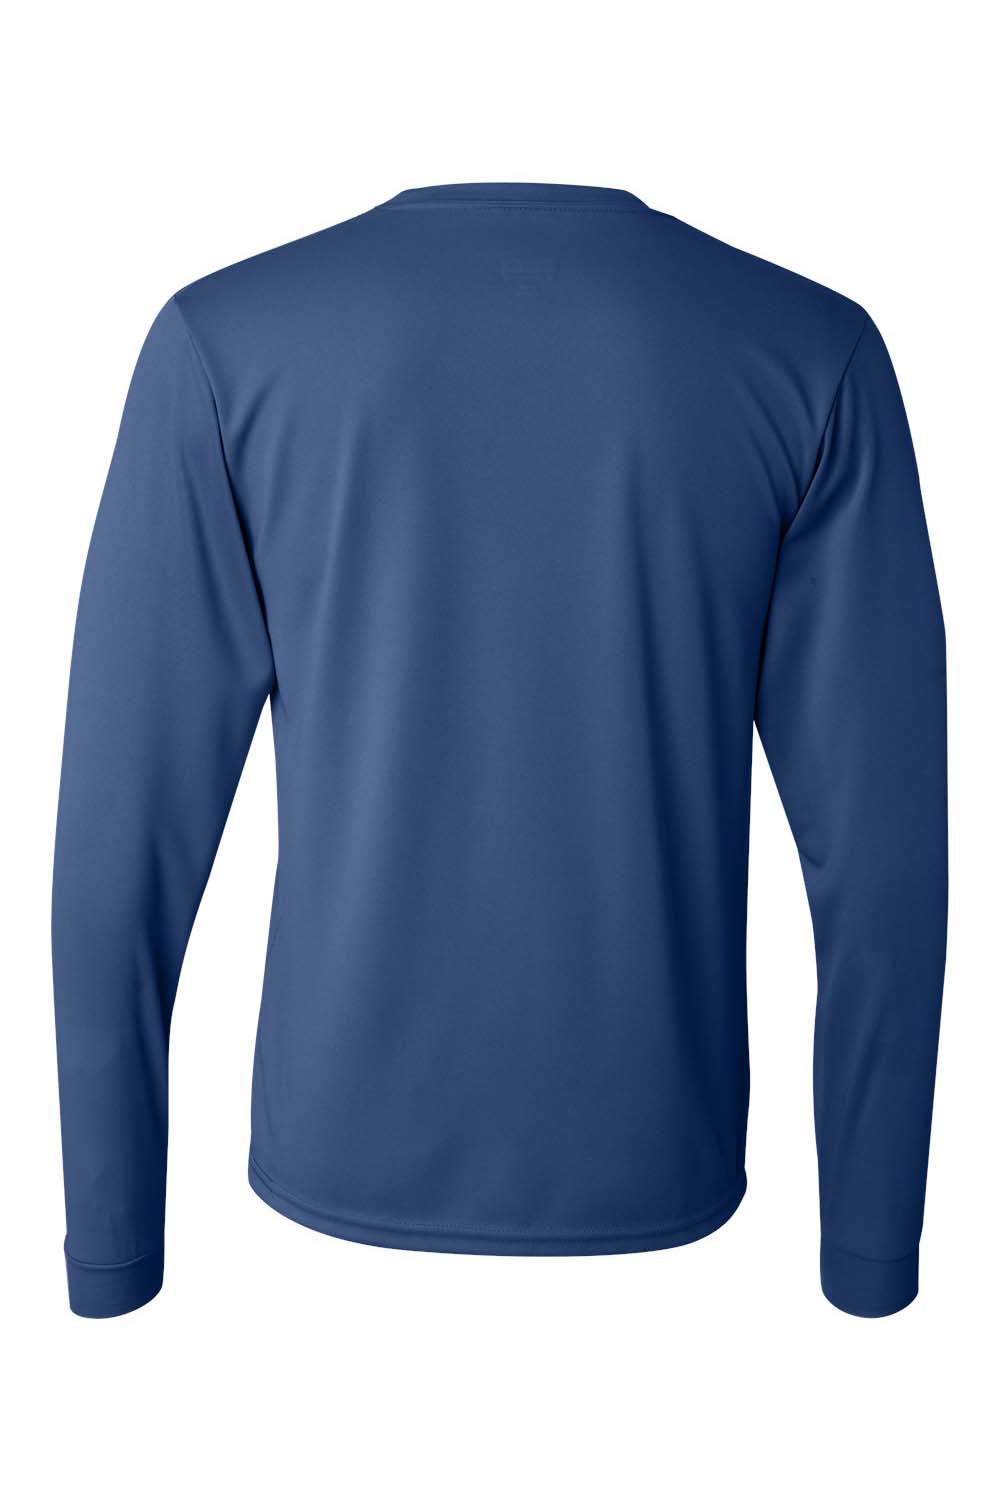 Augusta Sportswear 788 Mens Moisture Wicking Long Sleeve Crewneck T-Shirt Royal Blue Model Flat Back